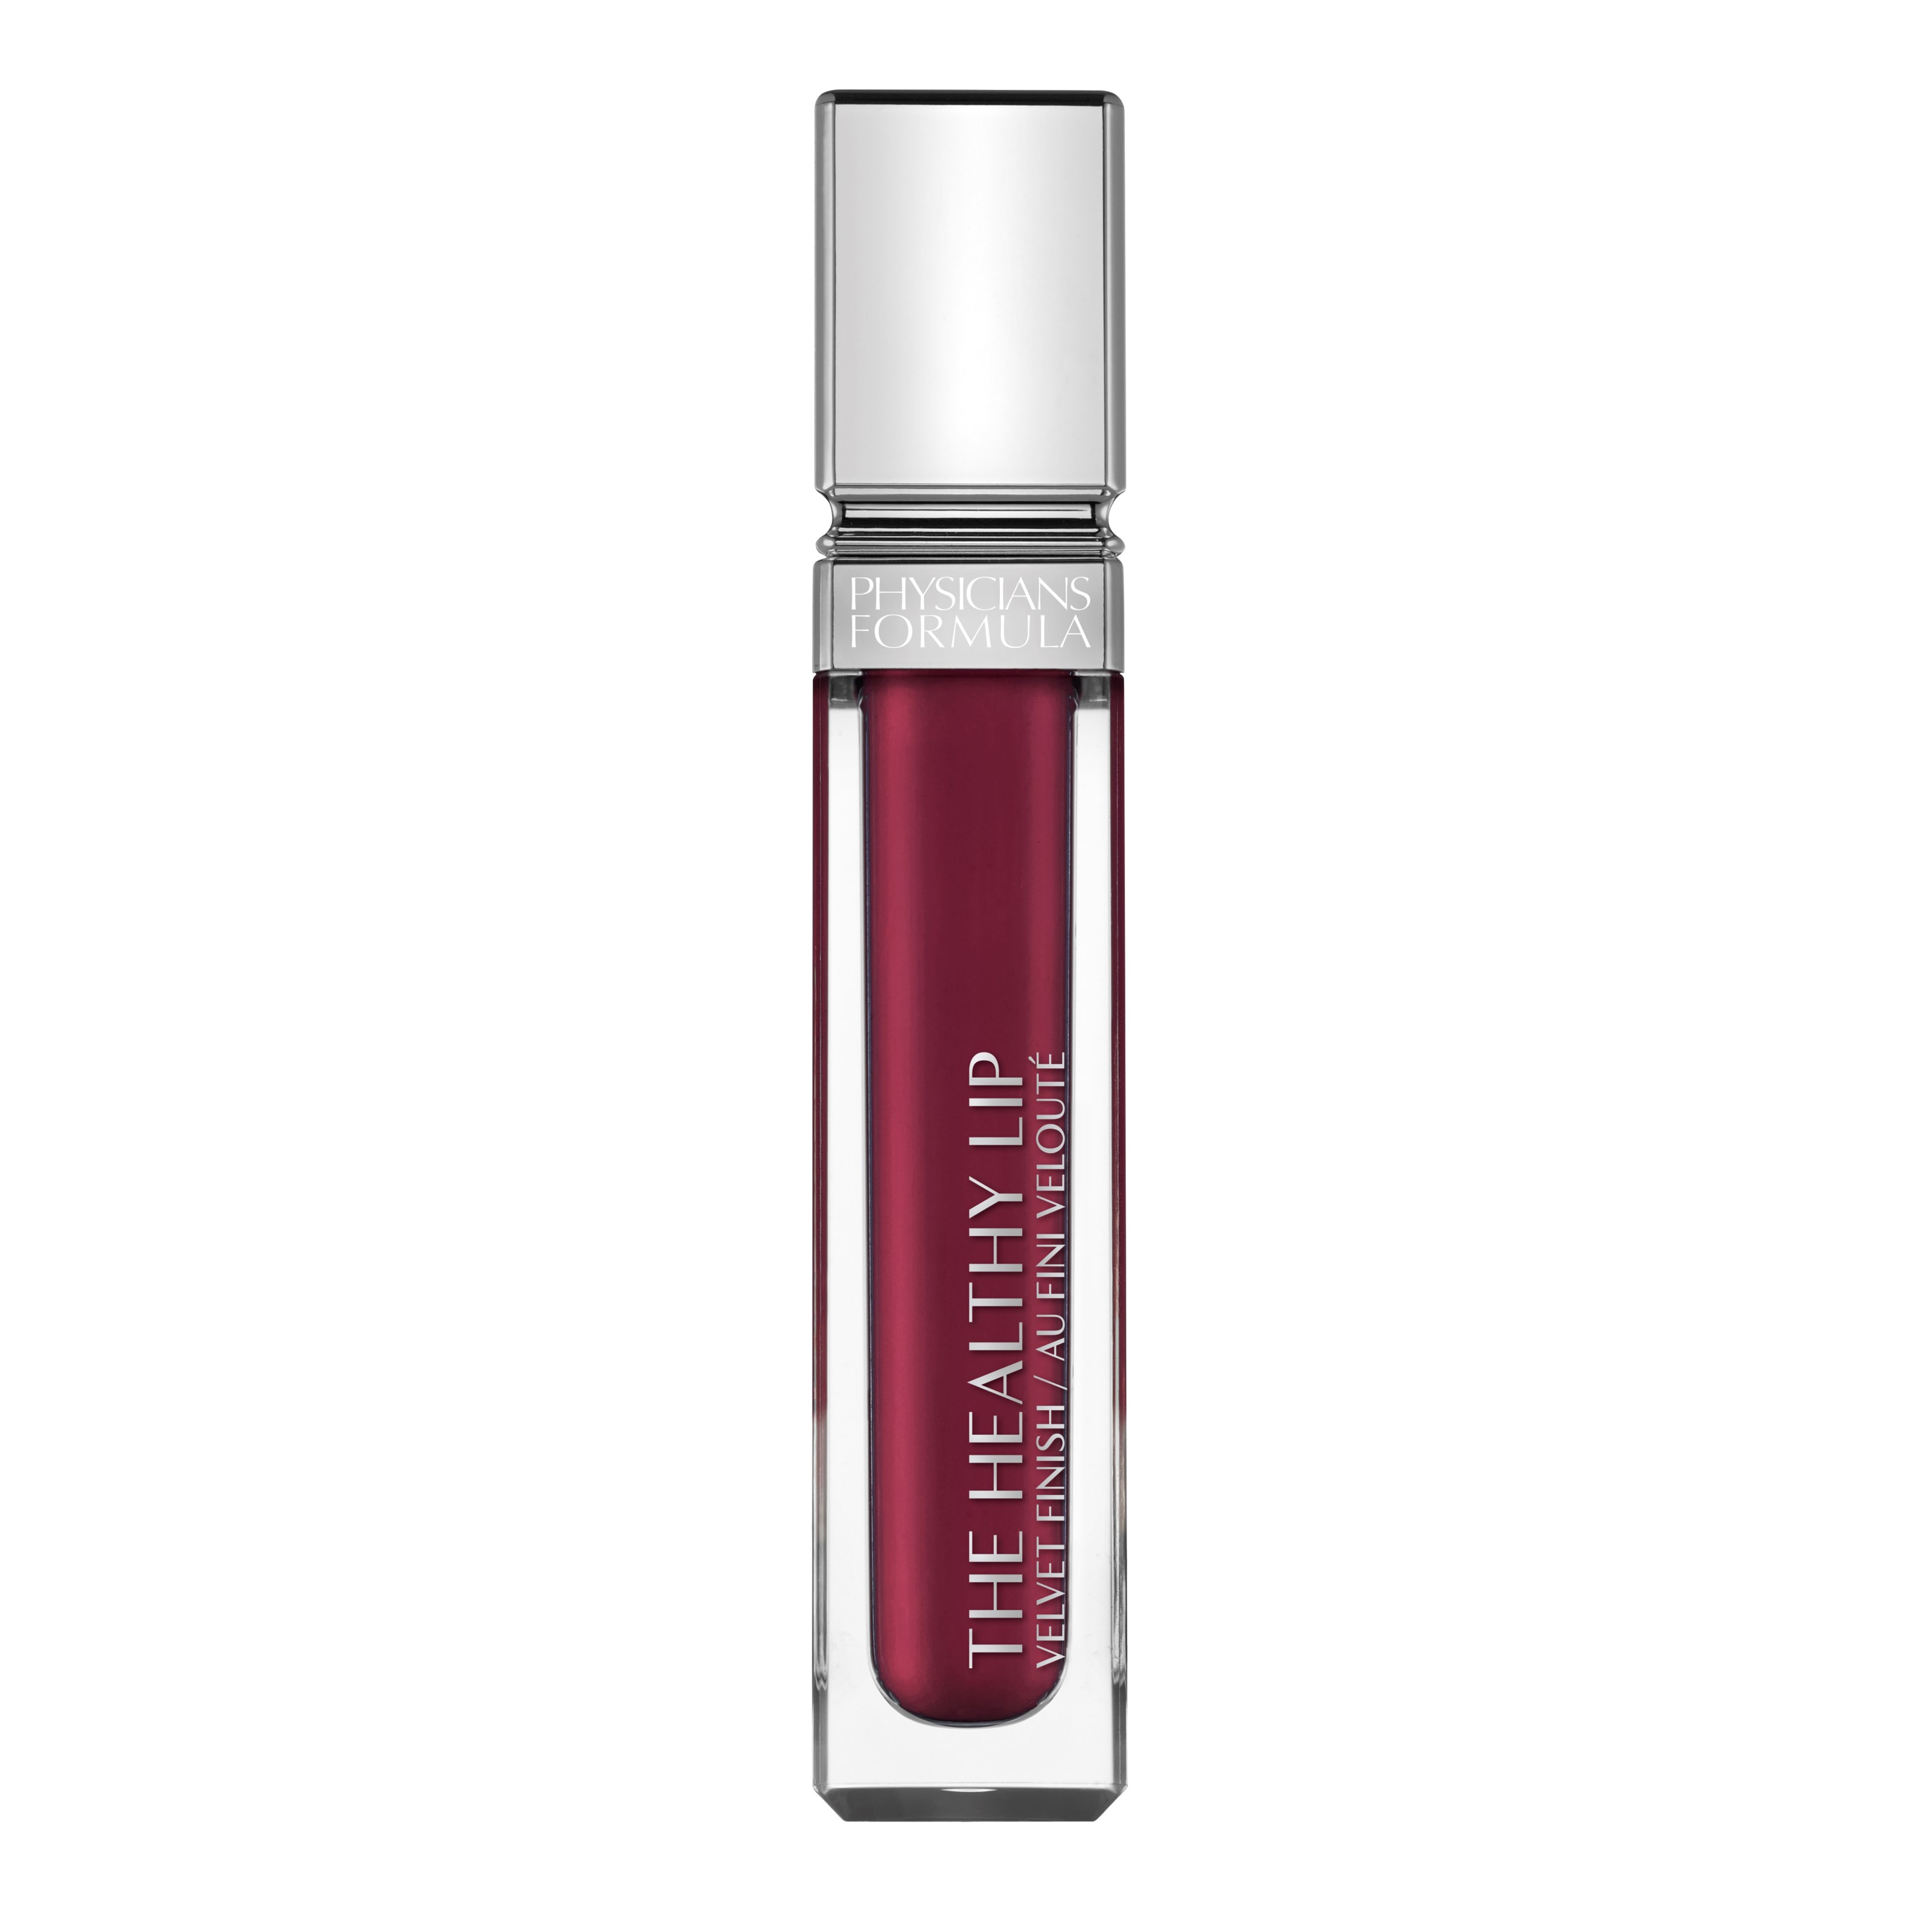 Physicians Formula The Healthy Lip Velvet Liquid Lipstick Noir is